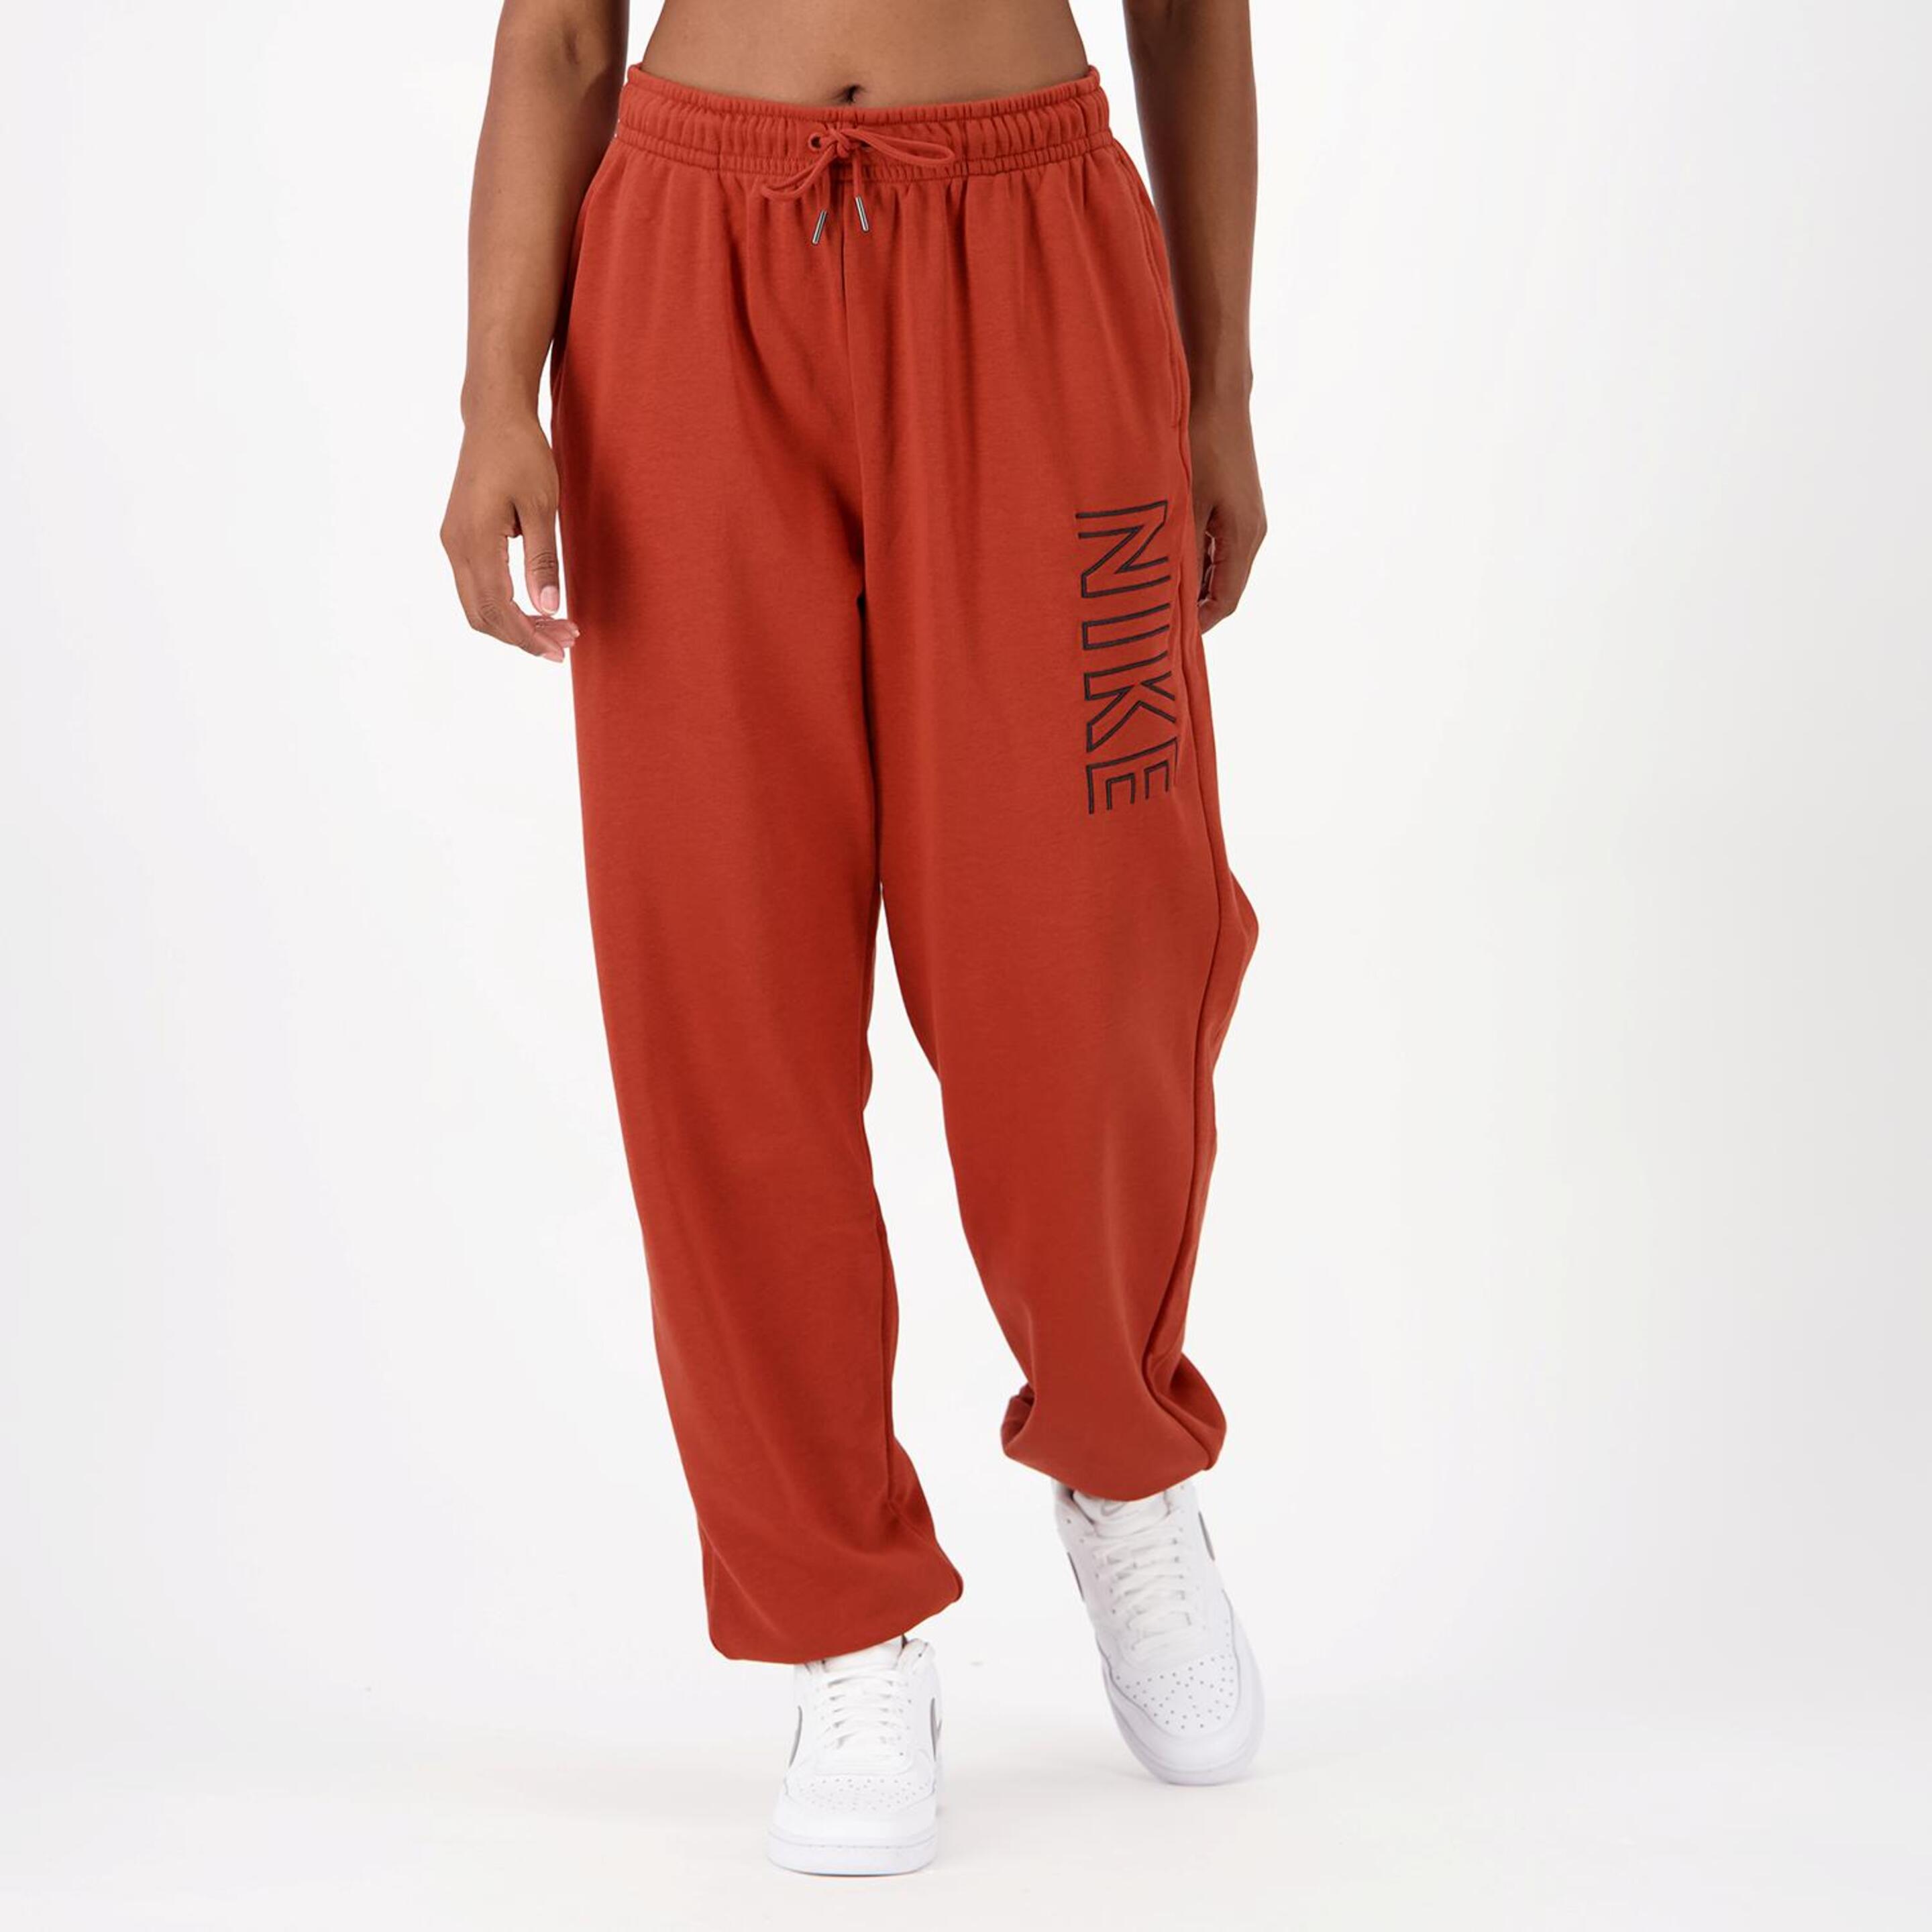 Nike Dance - rojo - Pantalón Chándal Mujer